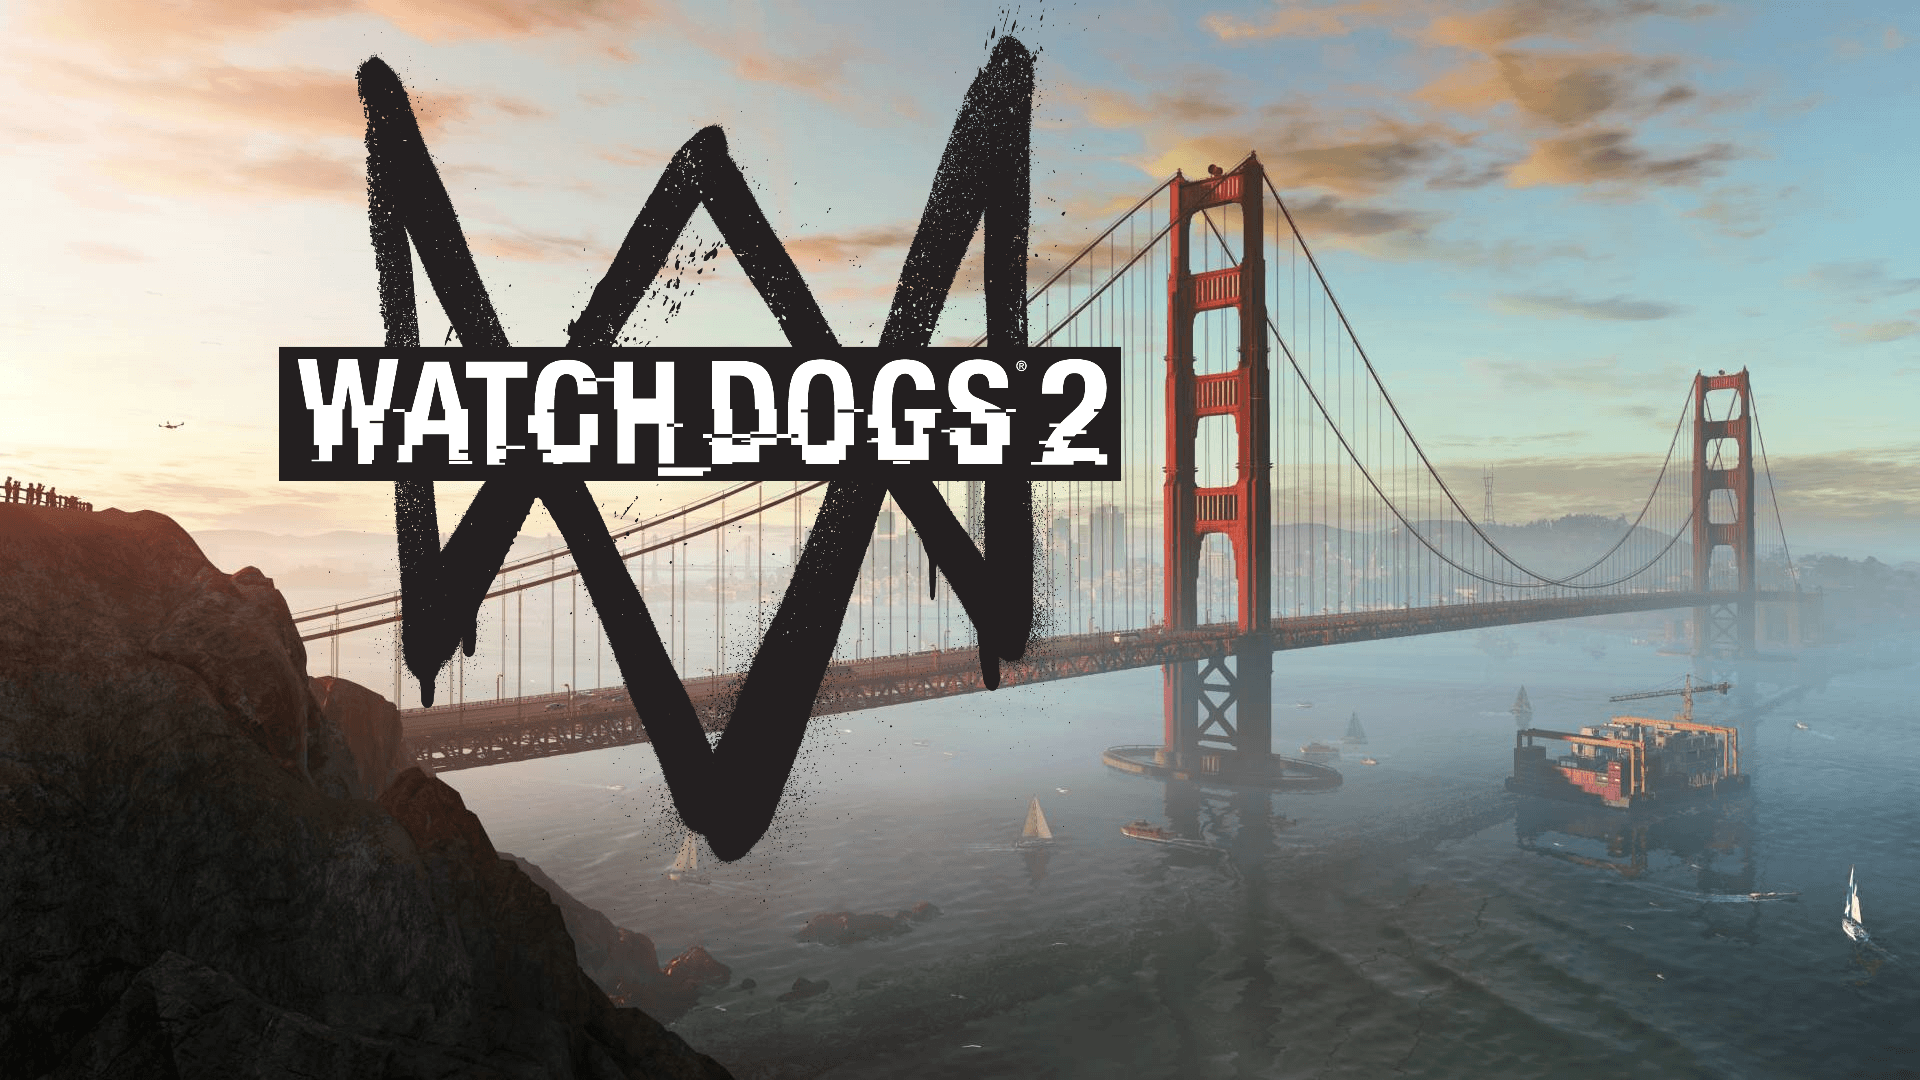 Watch Dogs 2 Game Desktop Wallpaper 62007 1920x1080 px